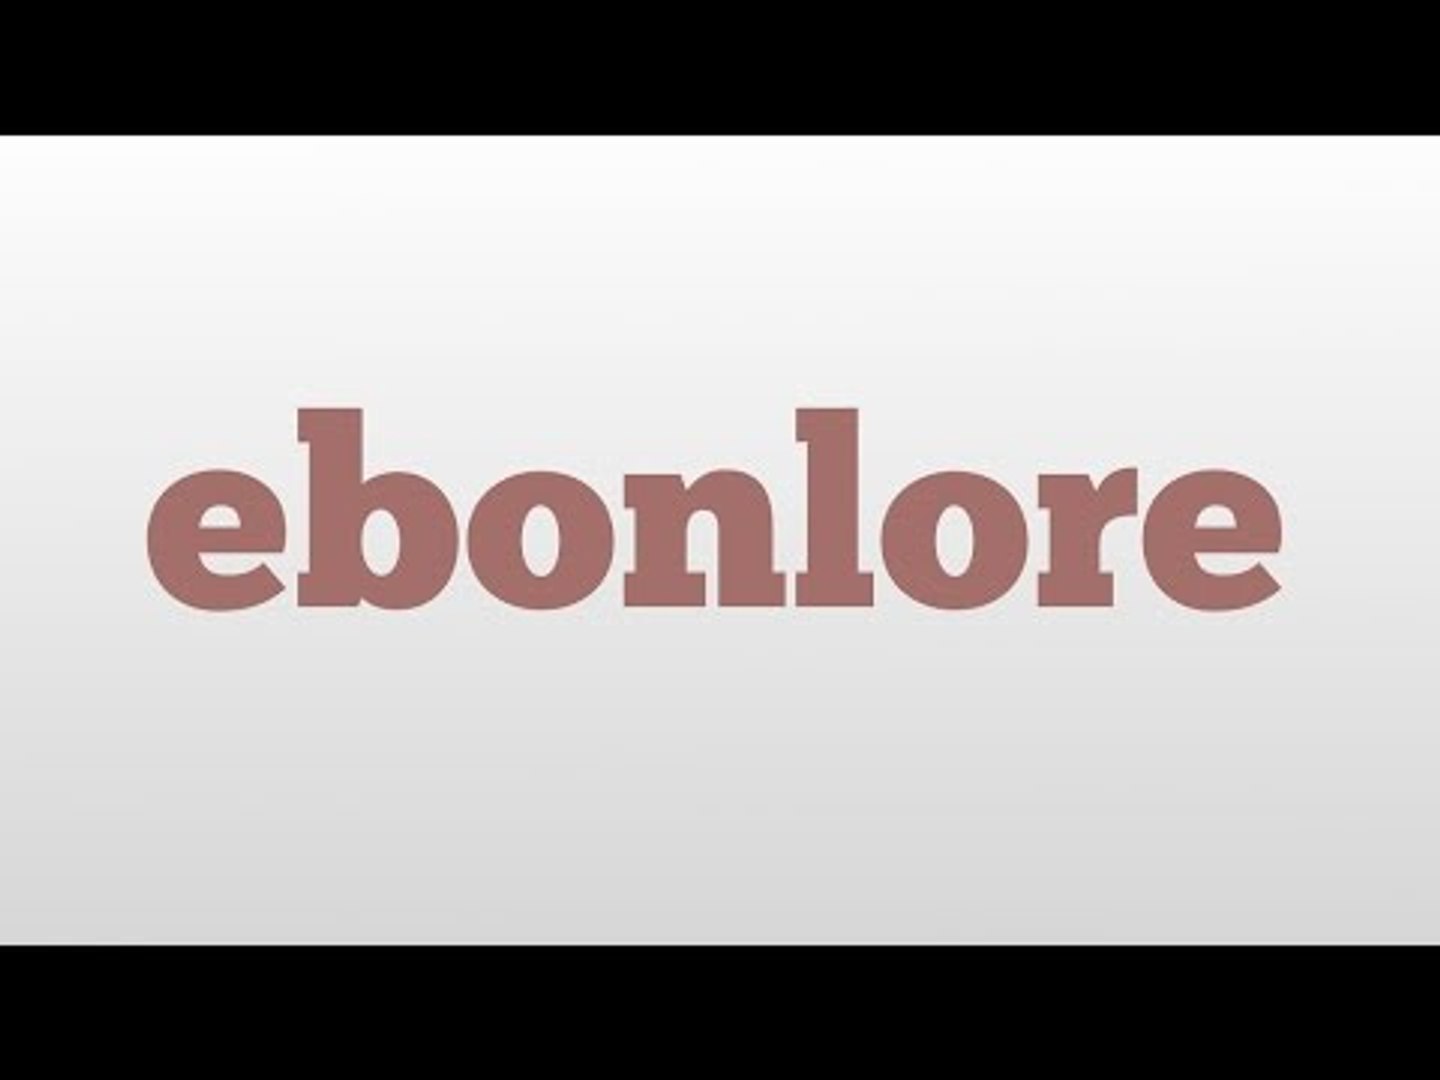 ebonlore meaning and pronunciation